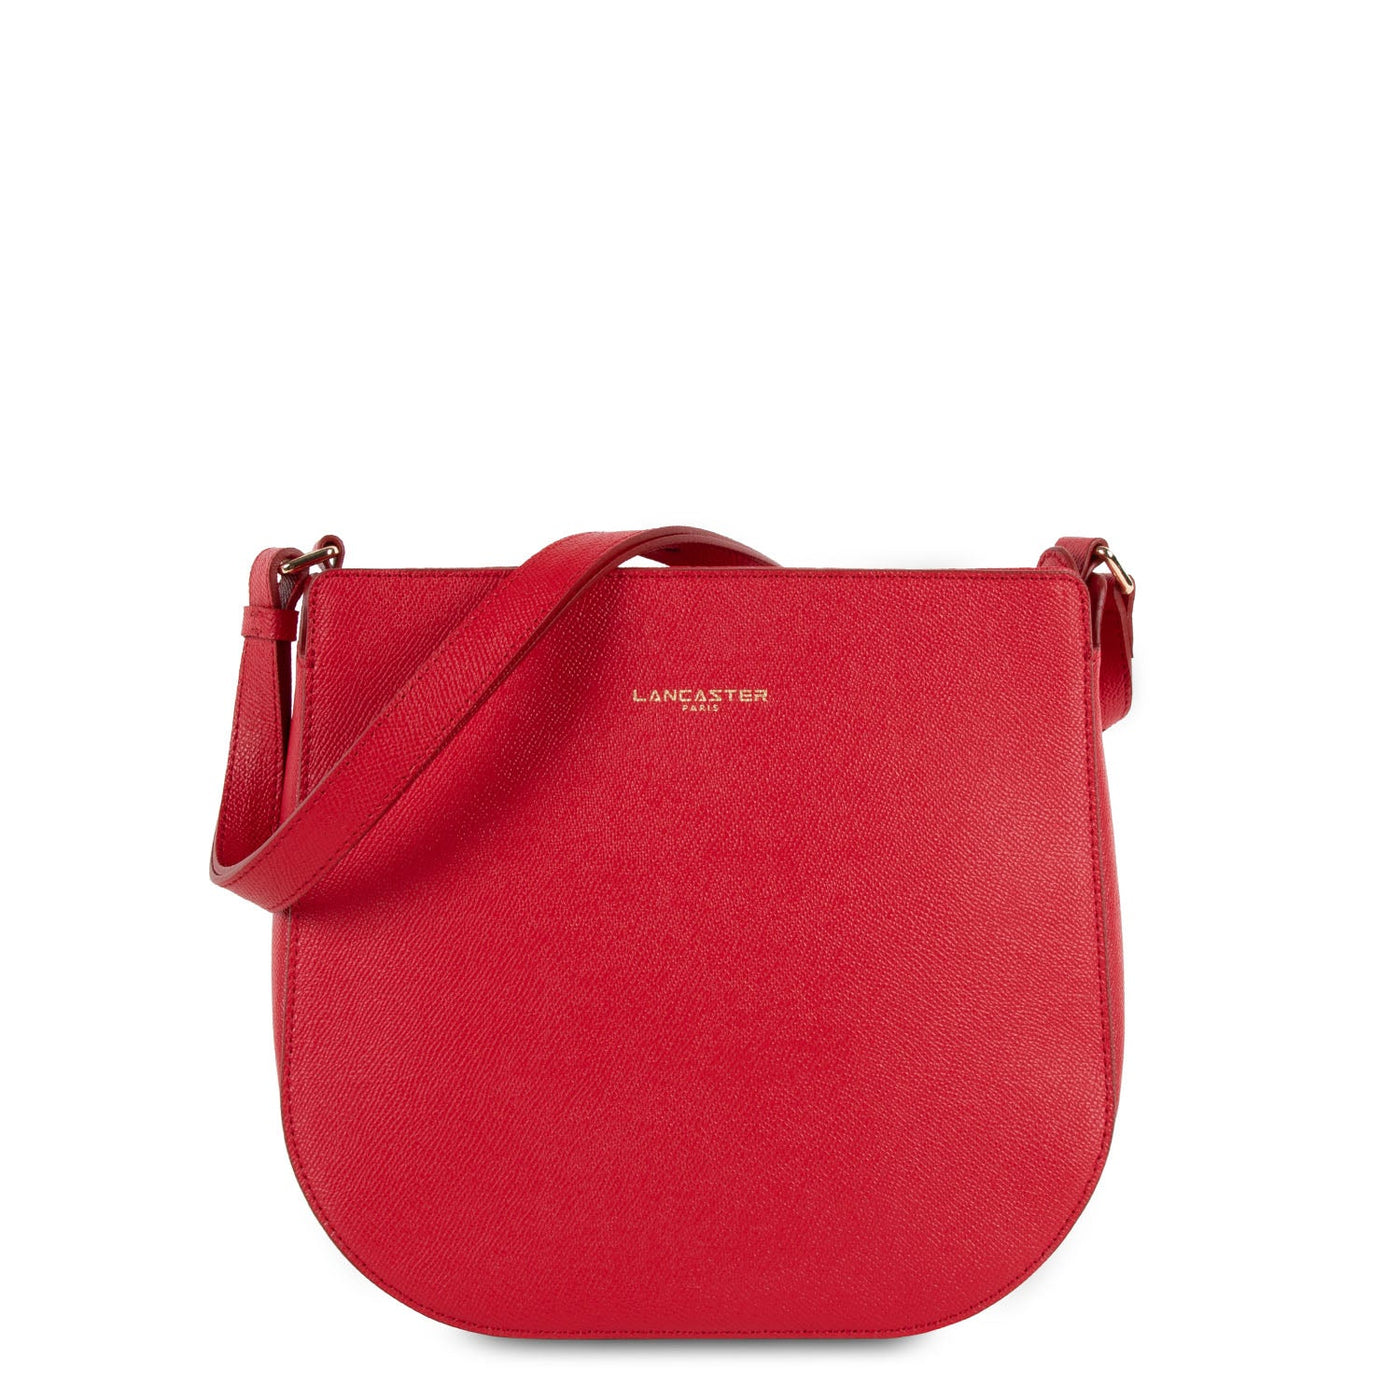 crossbody bag - delphino #couleur_rouge